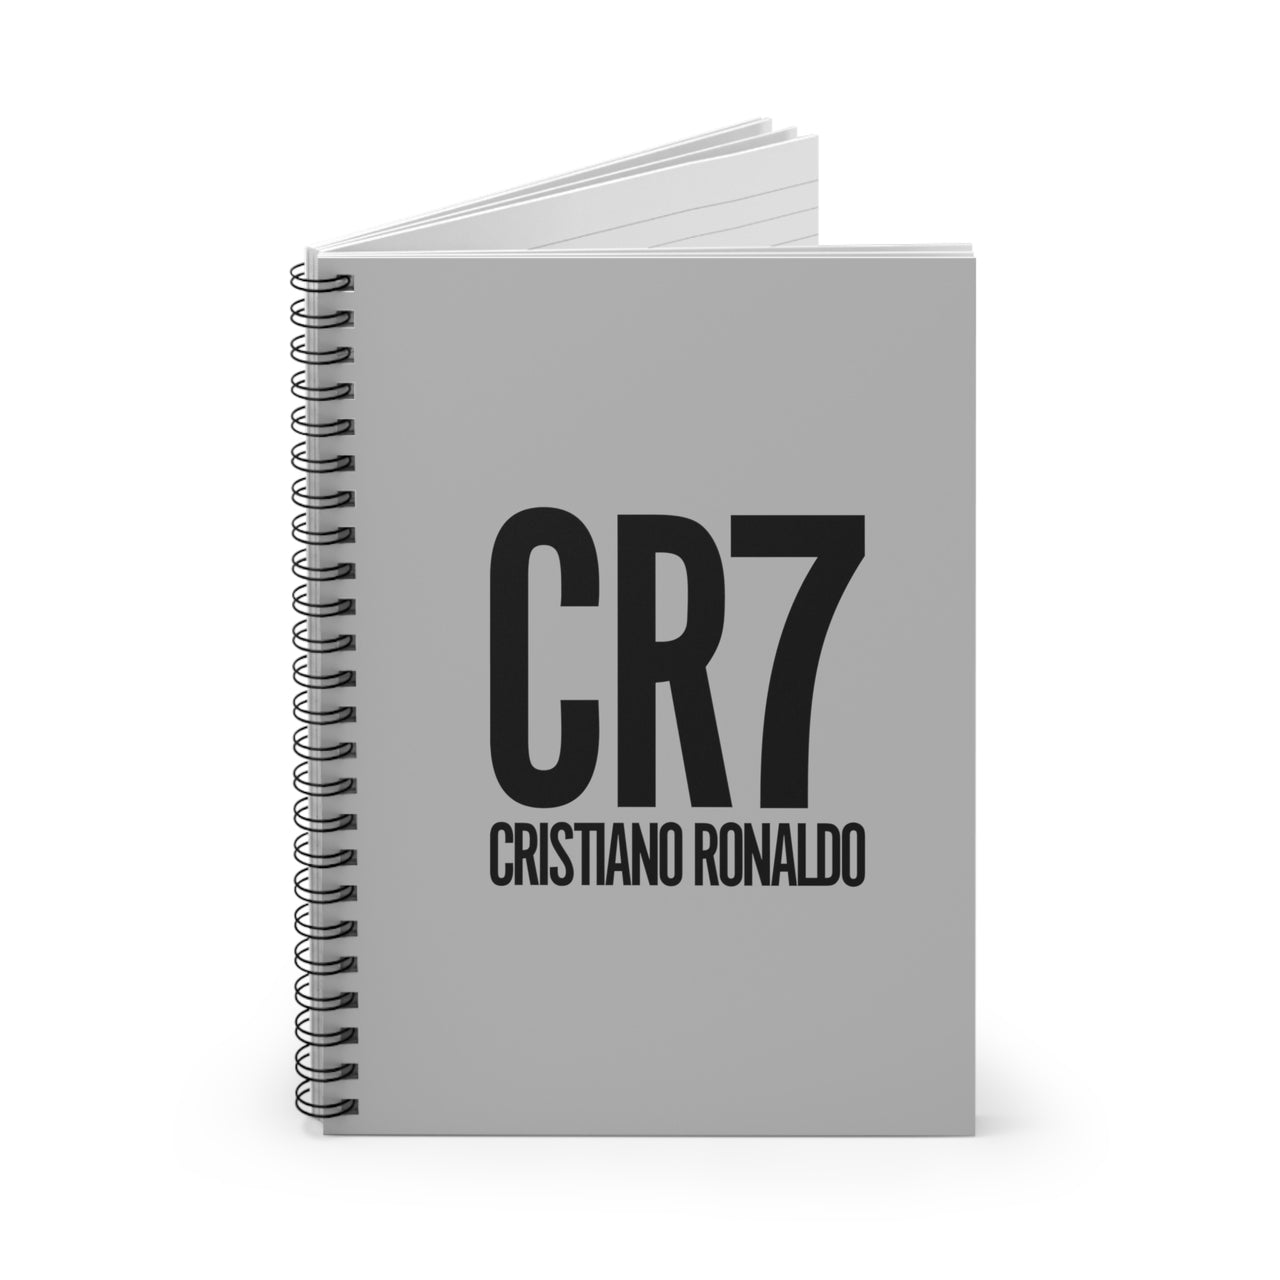 Cristiano Ronaldo Spiral Notebook - Ruled Line